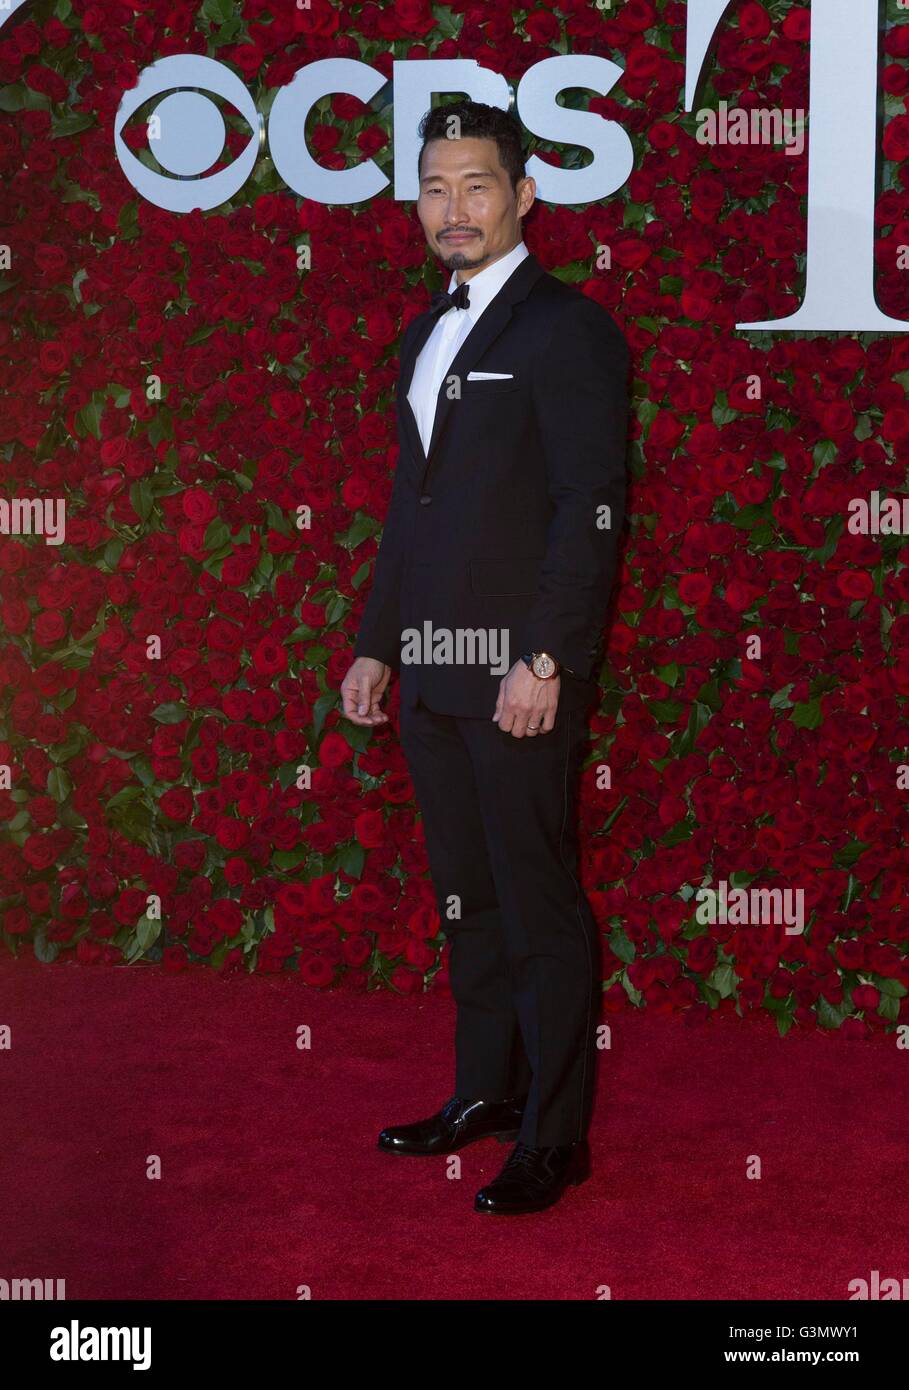 Daniel Dae Kim at arrivals for 70th Annual Tony Awards 2016 - Arrivals 2, Beacon Theatre, New York, NY June 12, 2016. Photo By: Lev Radin/Everett Collection Stock Photo